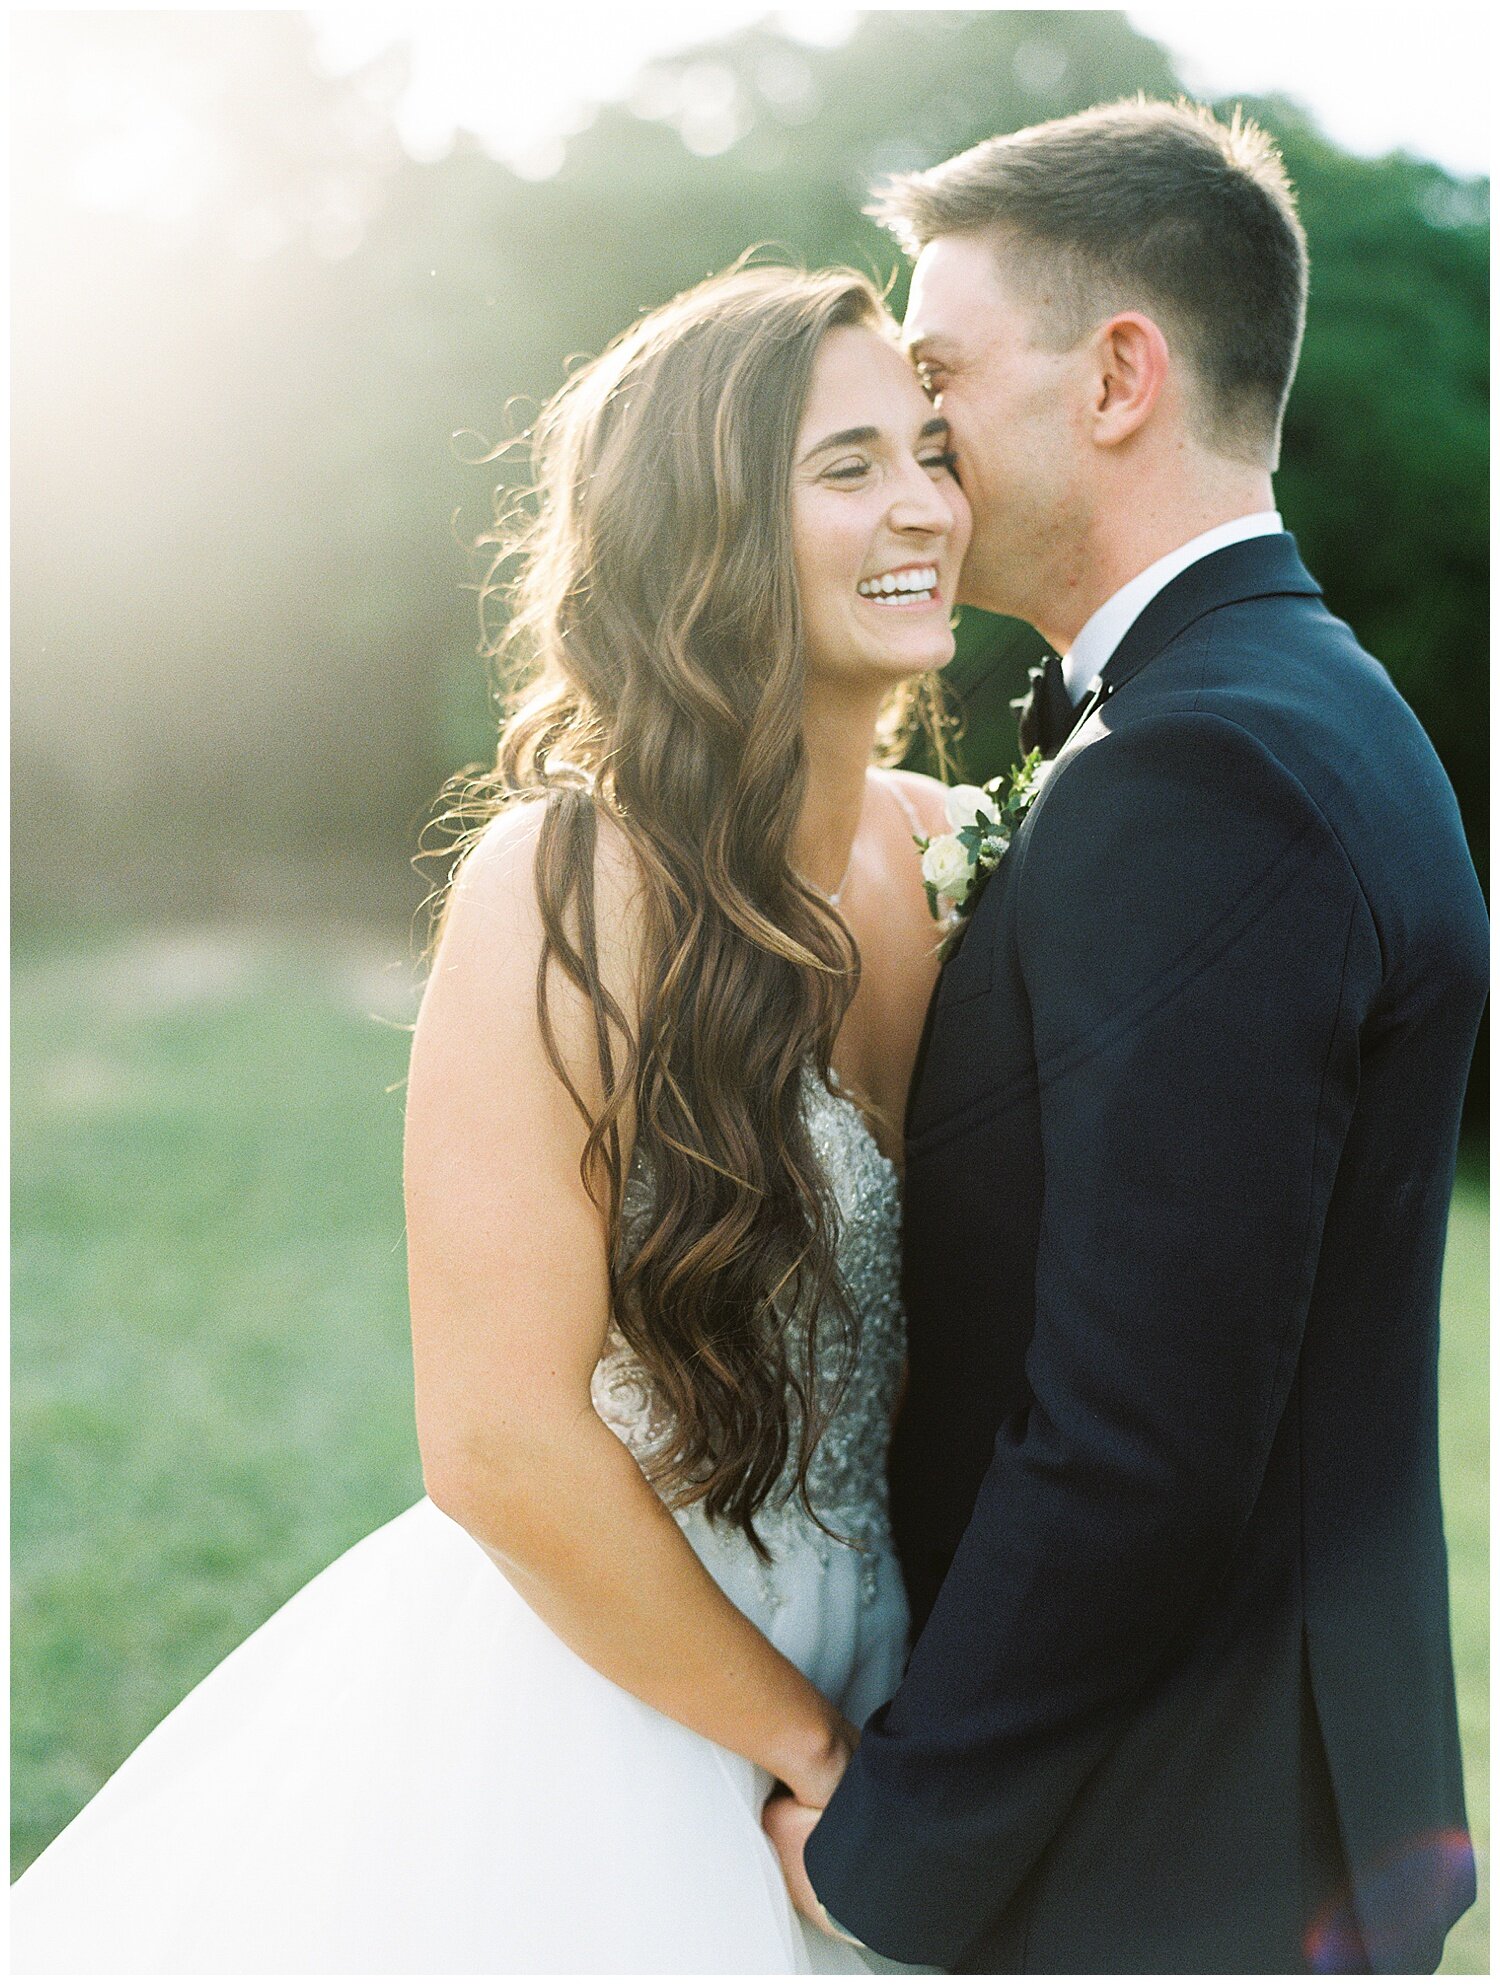 Kendall Point - Boerne TX Wedding Photography35.jpg